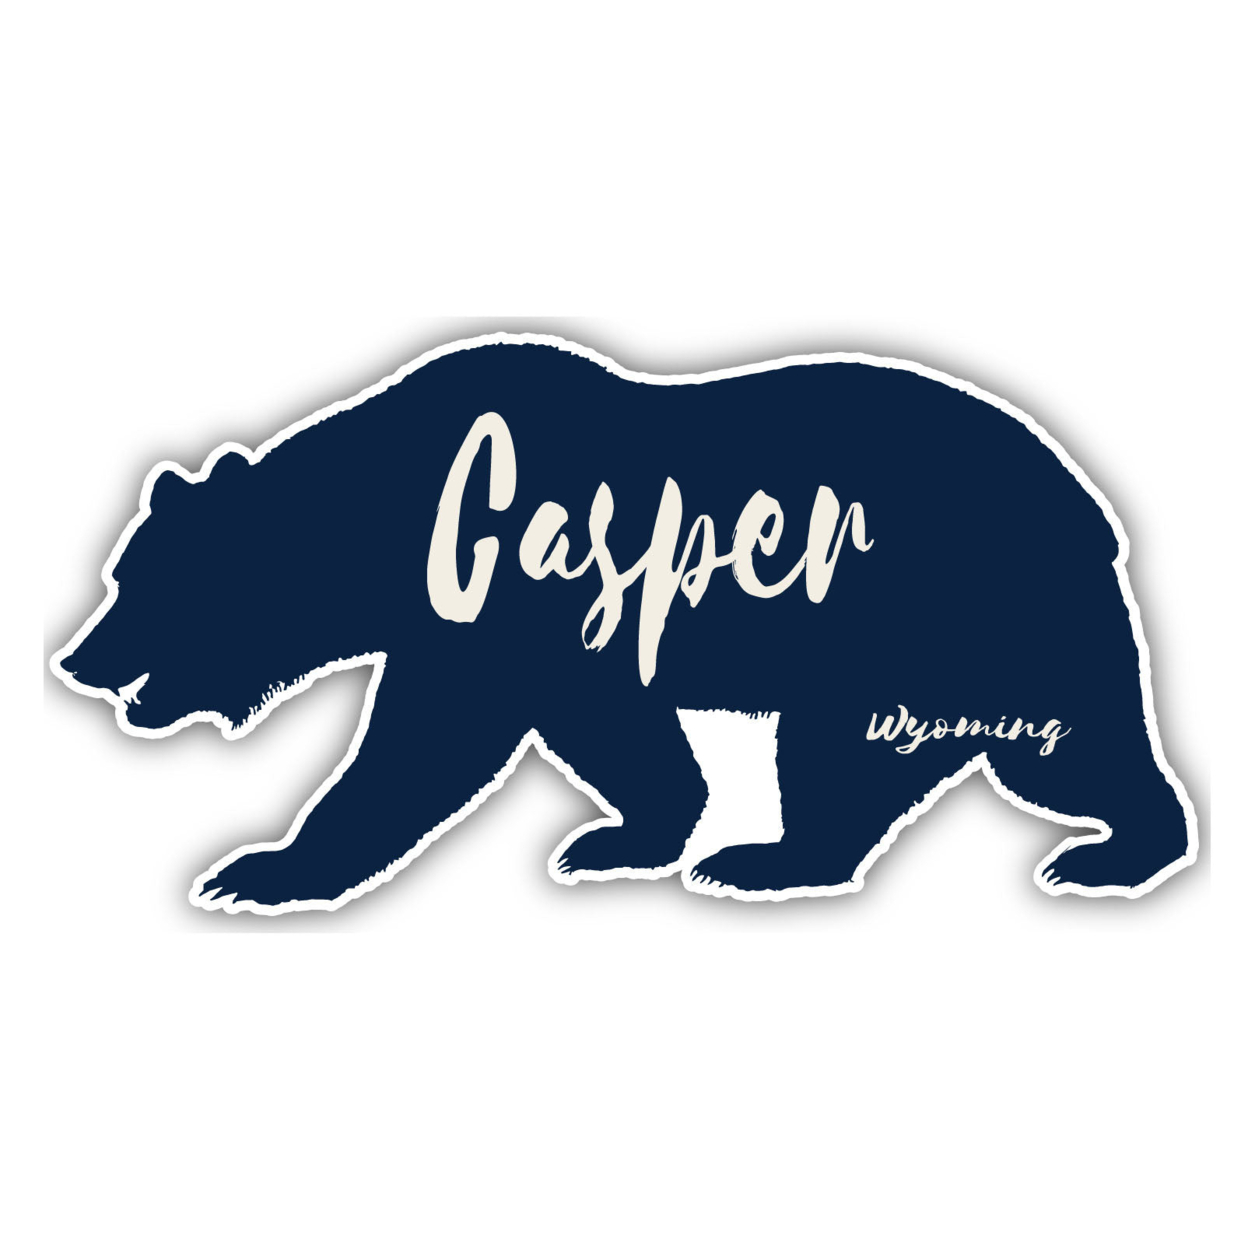 Casper Wyoming Souvenir Decorative Stickers (Choose Theme And Size) - Single Unit, 2-Inch, Tent